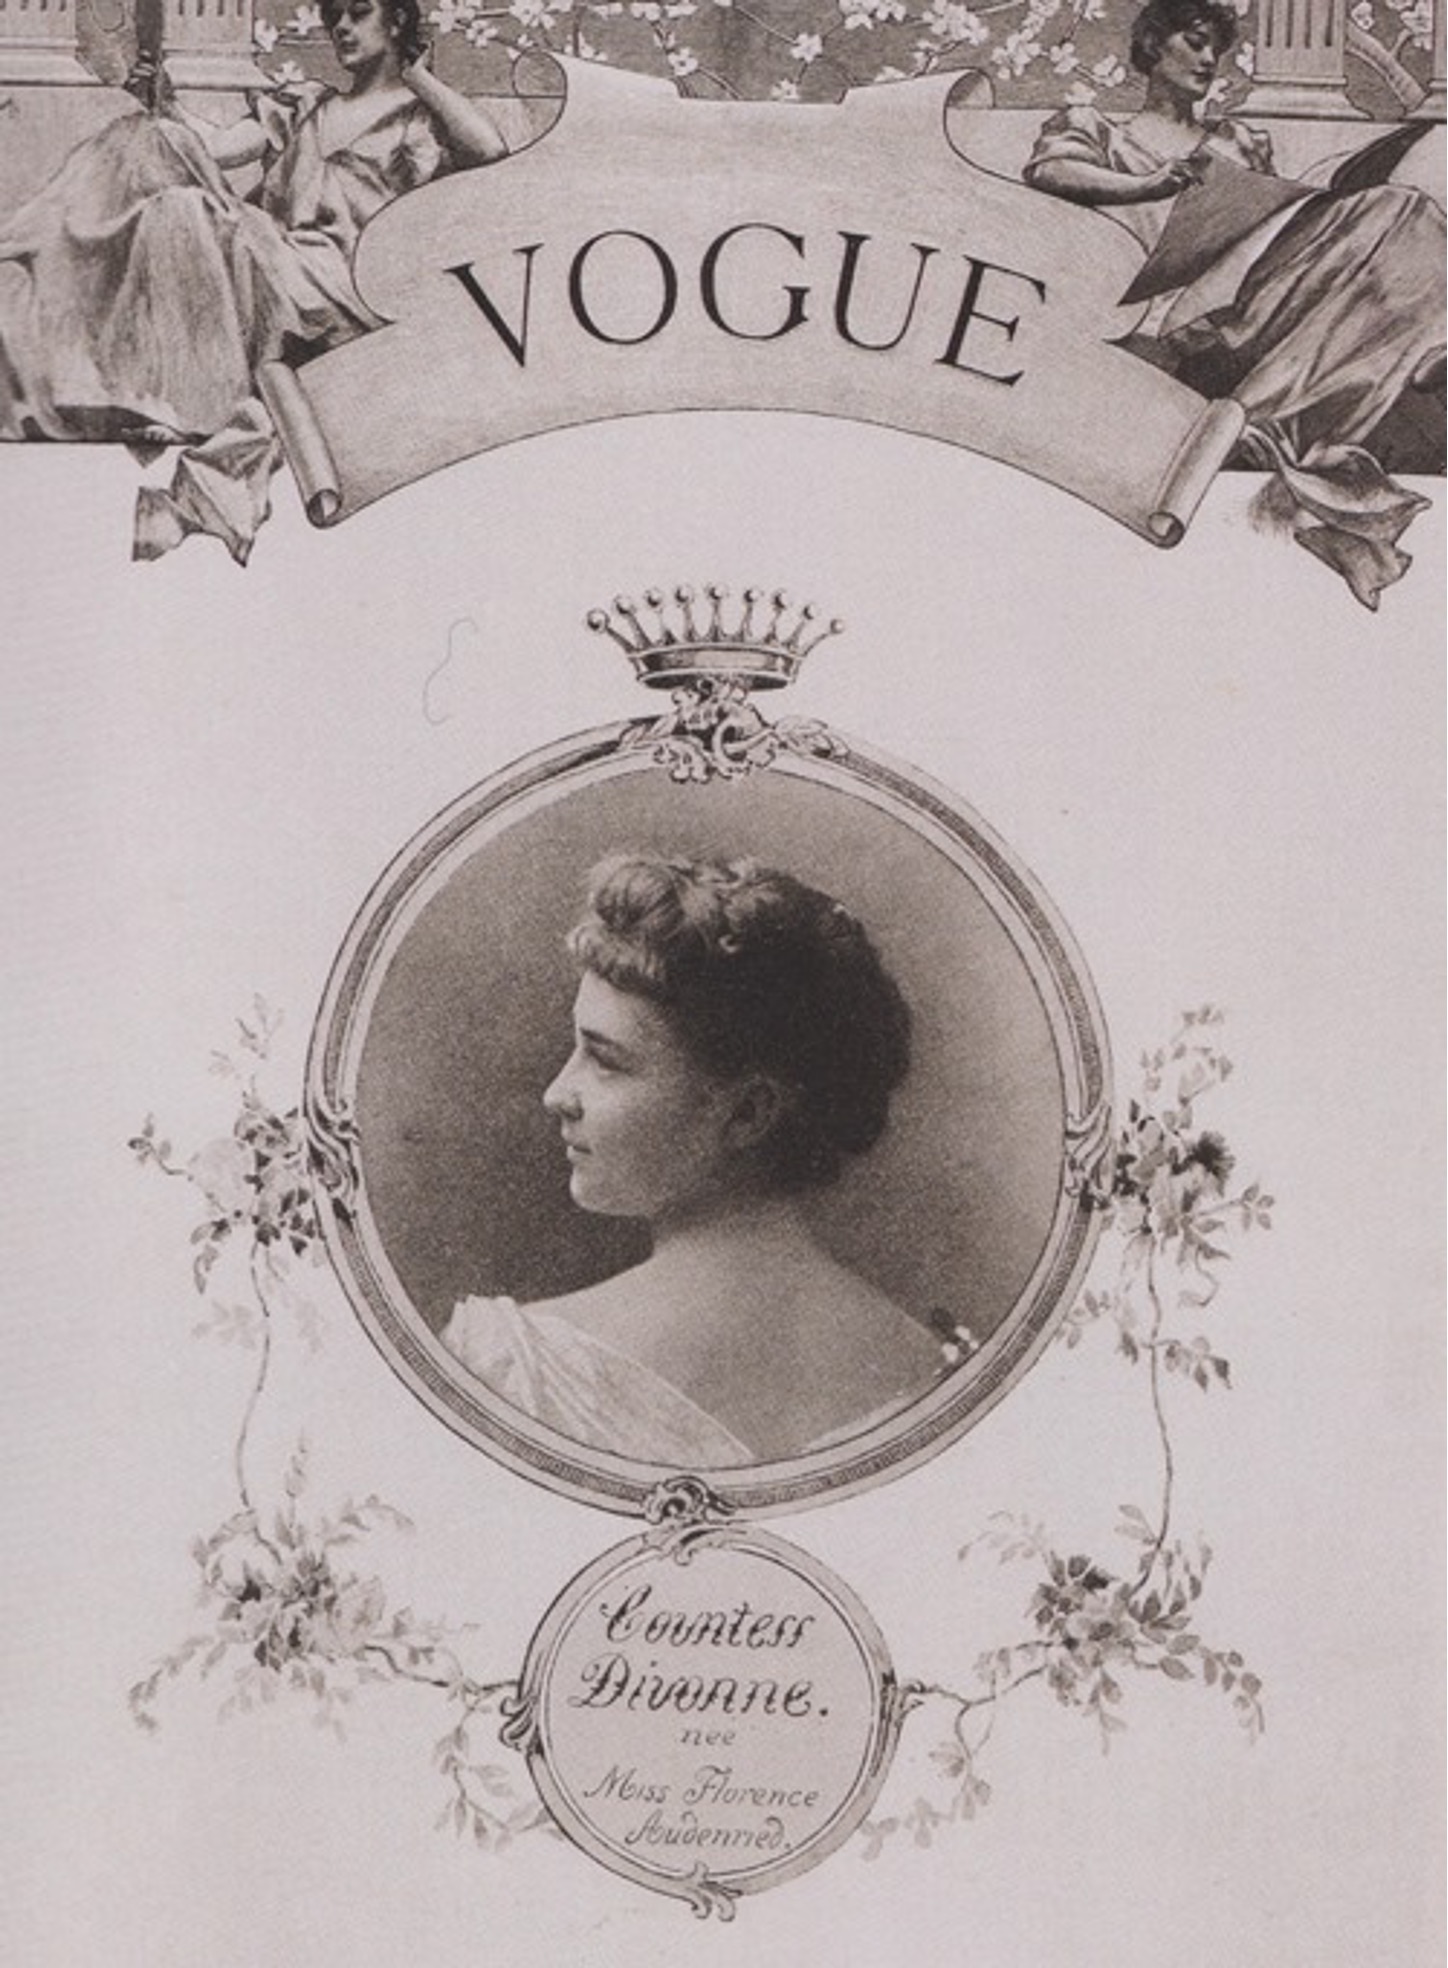 Обложка Vogue 1893 года